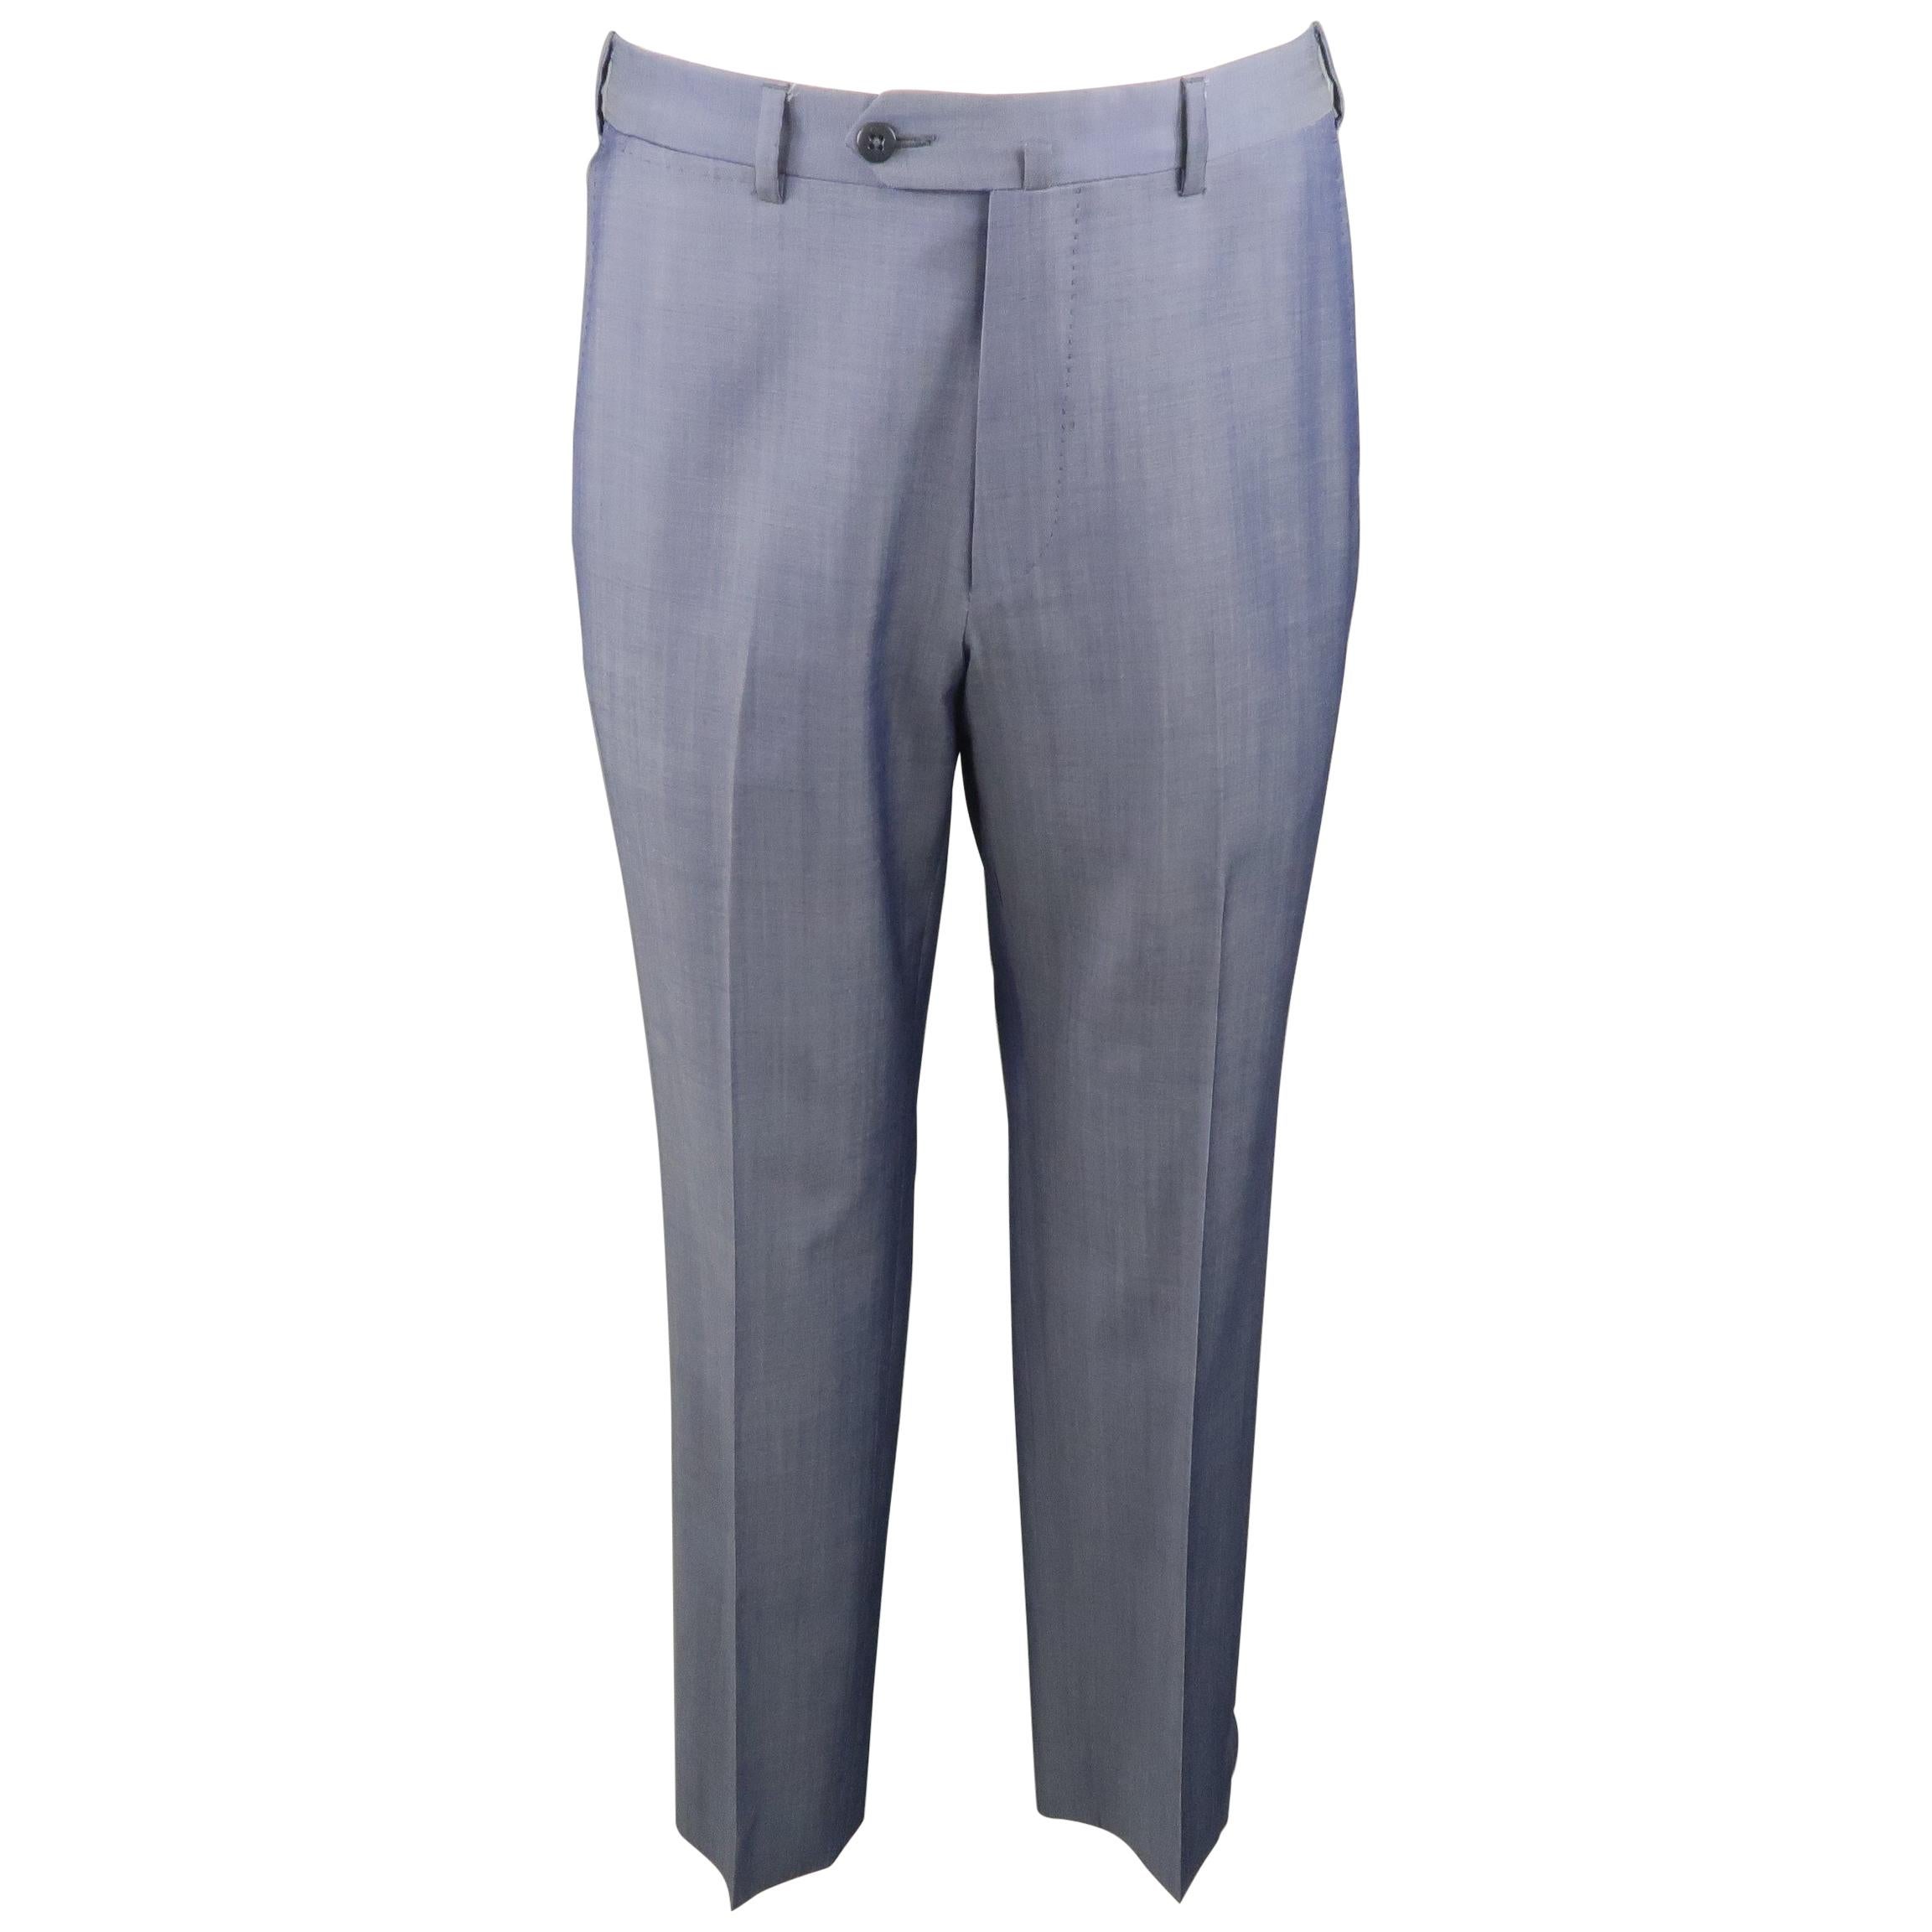 ERMENEGILDO ZEGNA Size 32 Steel Blue Solid Wool Dress Pants